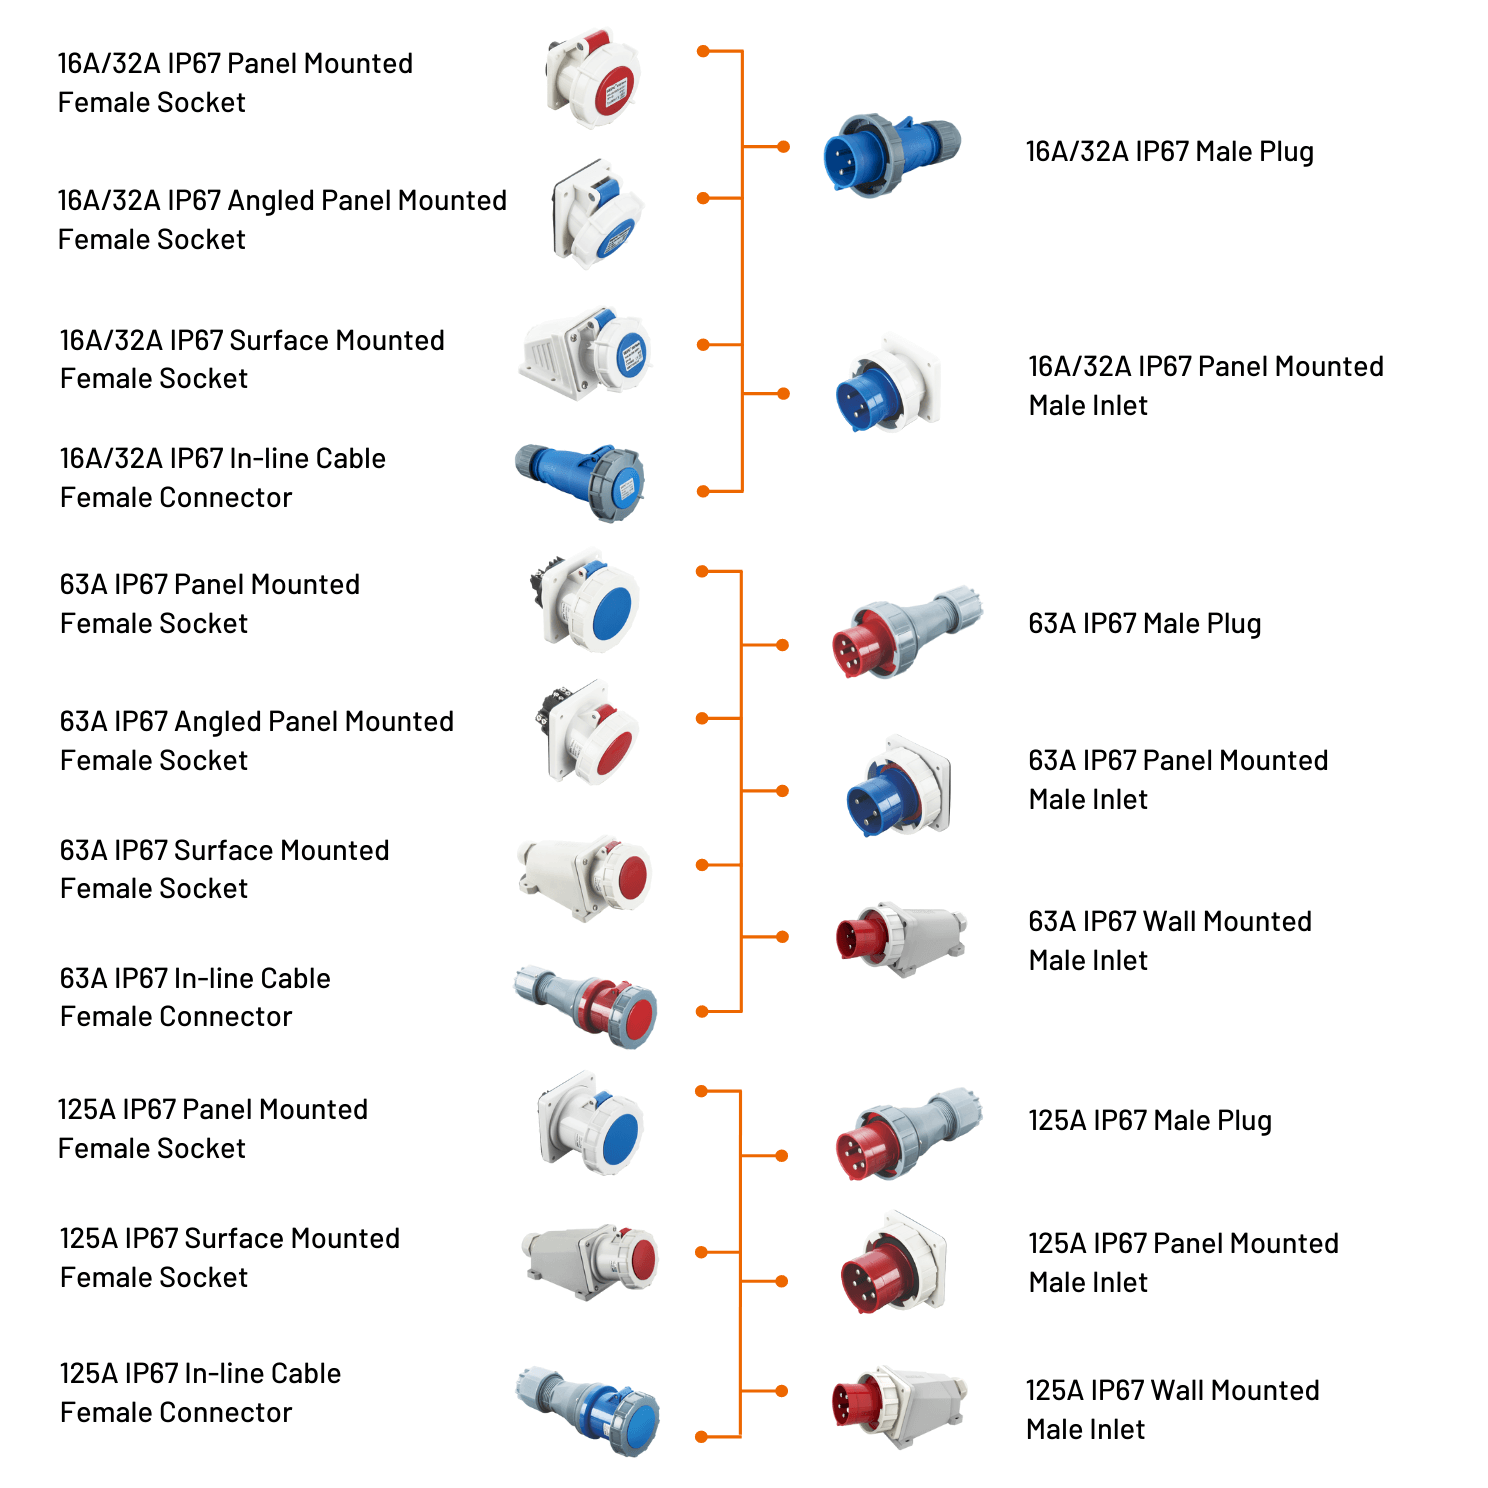 2. IP67 CEE Connector